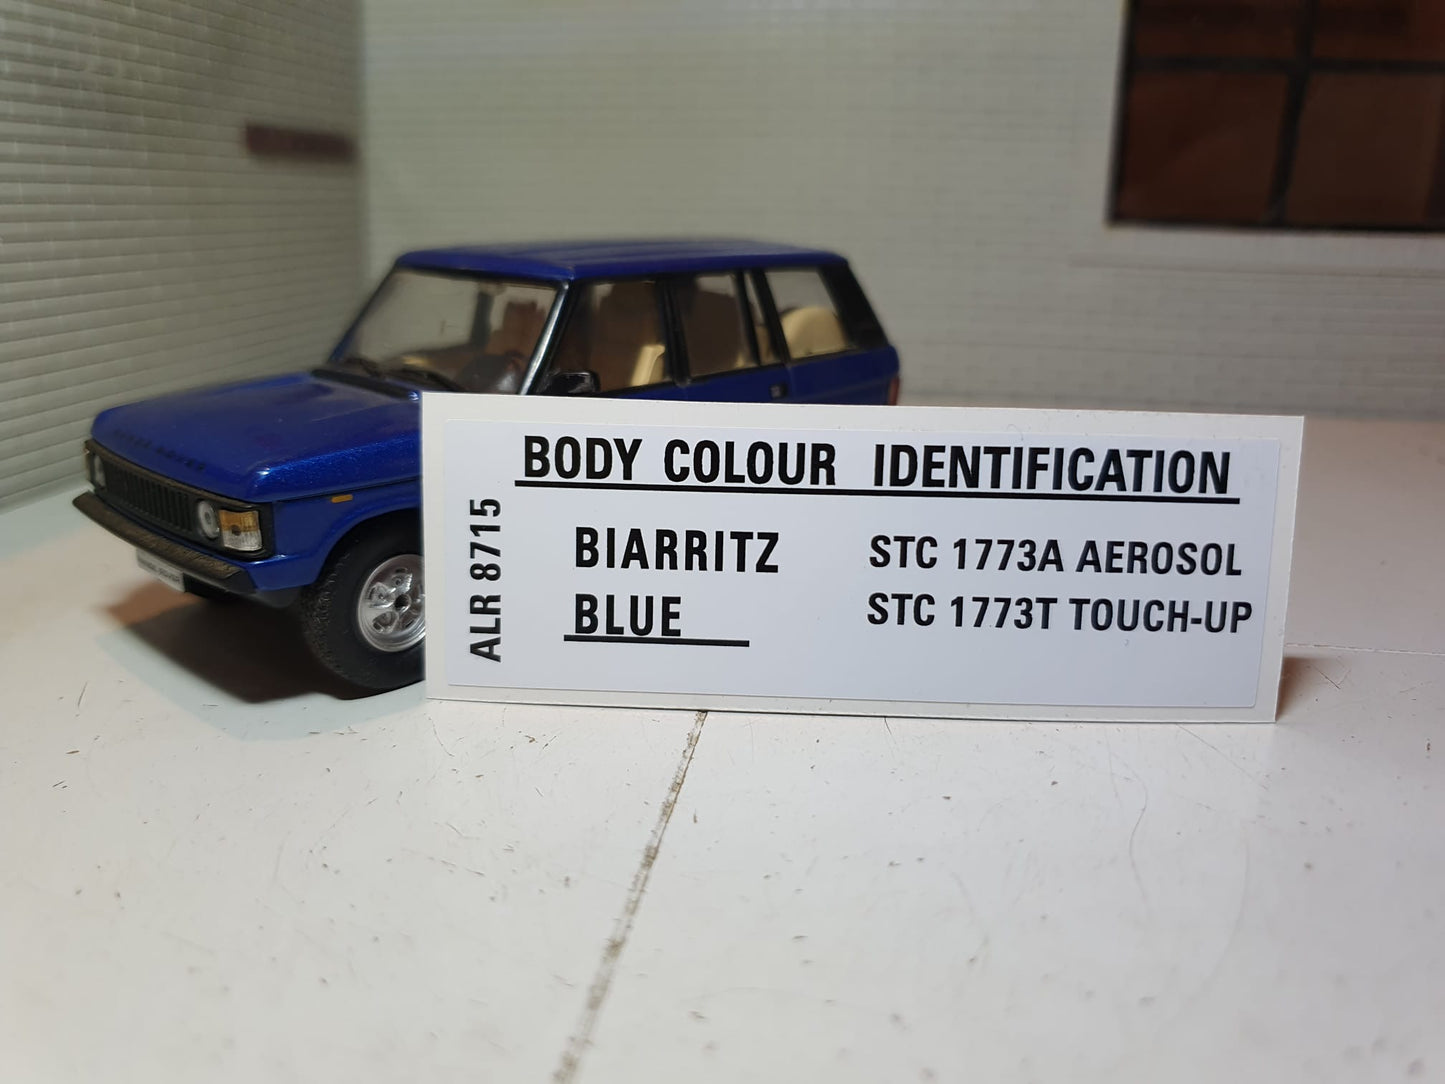 Land Rover Body Colour Identification Paint Colour Code Decals